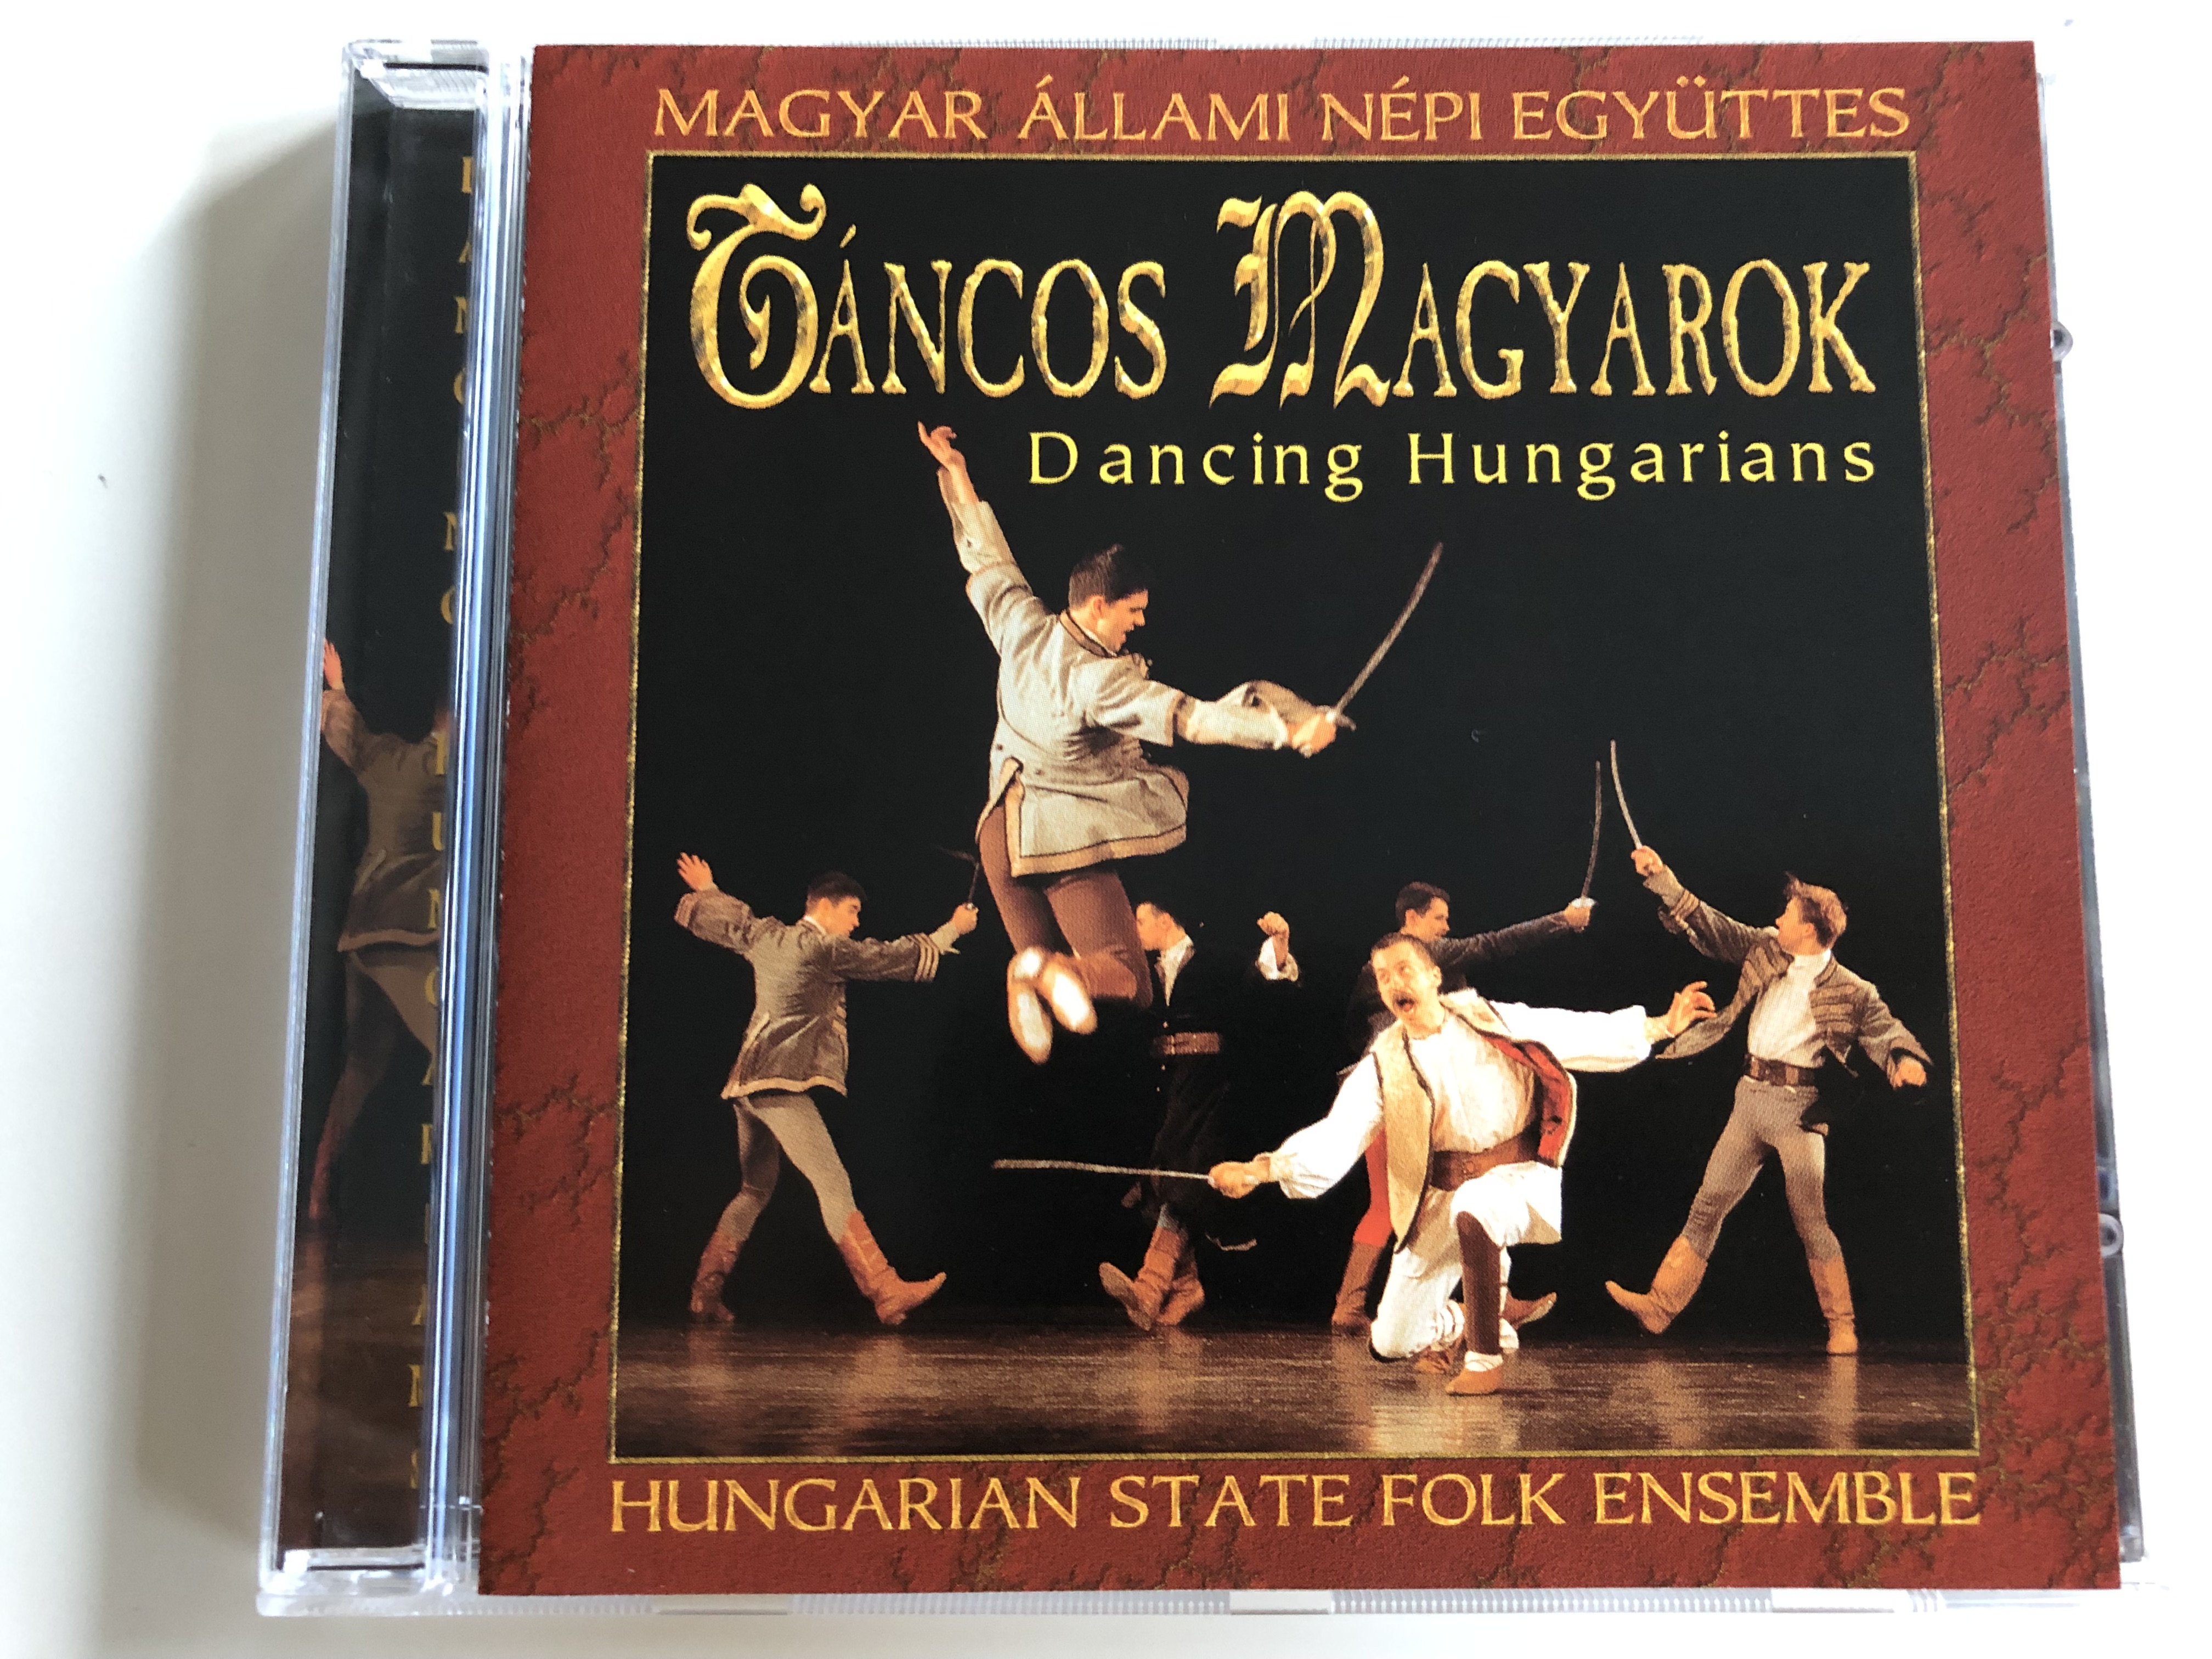 magyar-llami-n-pi-egy-ttes-t-ncos-magyarok-dancing-hungarians-hungarian-state-folk-ensemble-audio-cd-2000-cdan04-1-.jpg